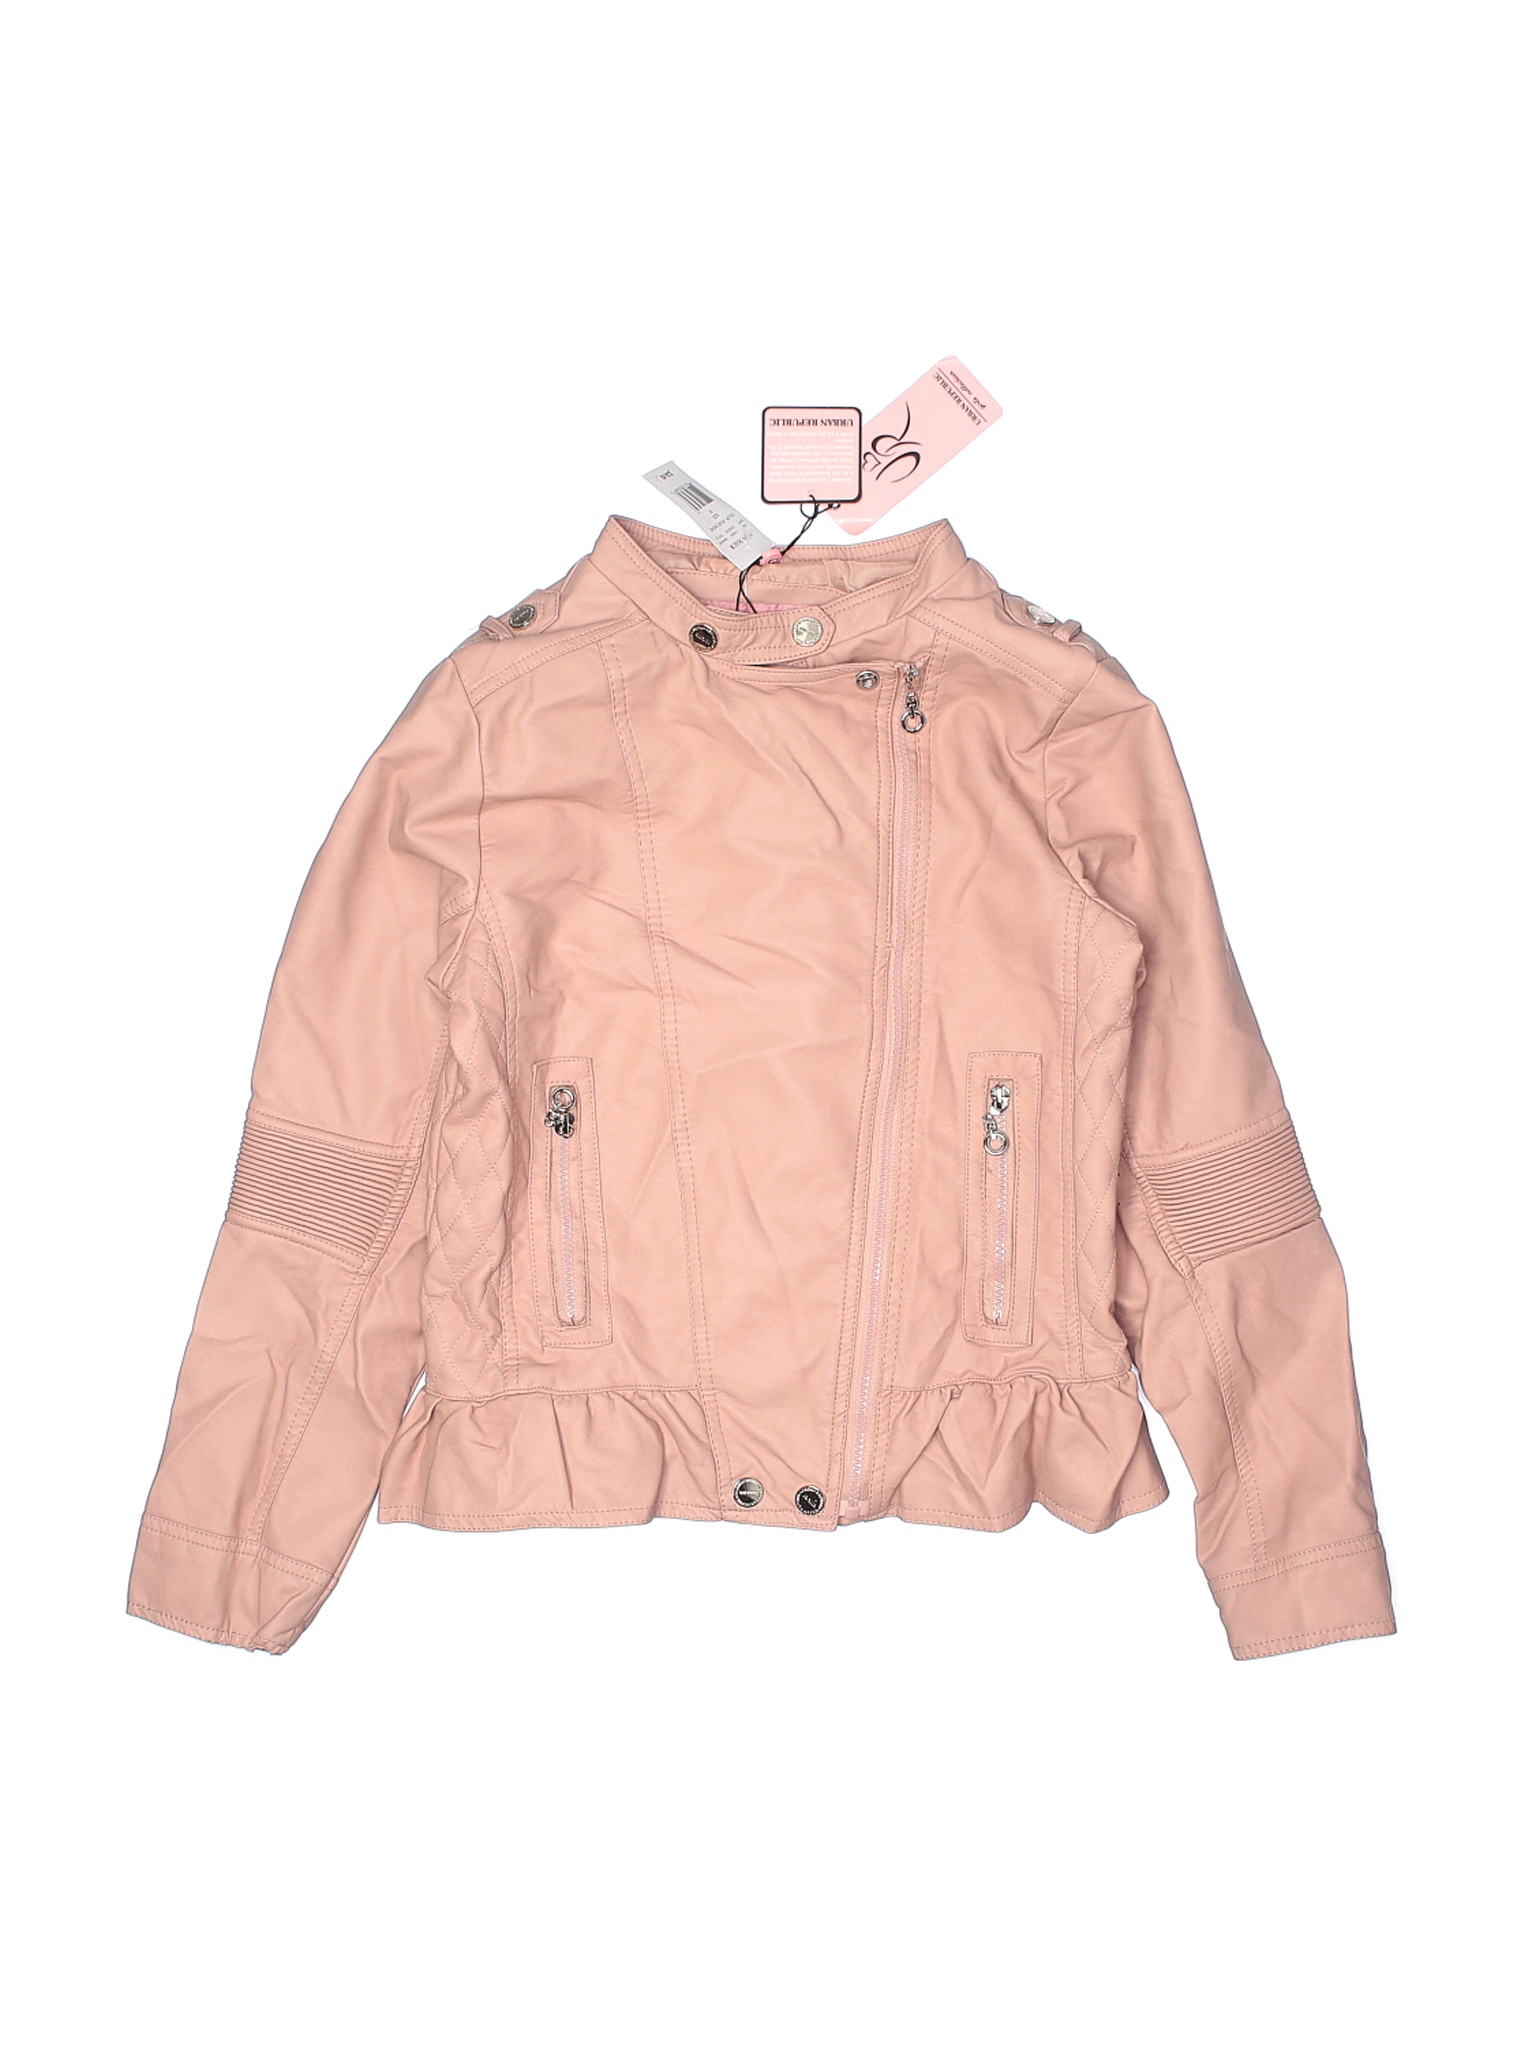 NWT Urban Republic Girls Pink Faux Leather Jacket 16 | eBay